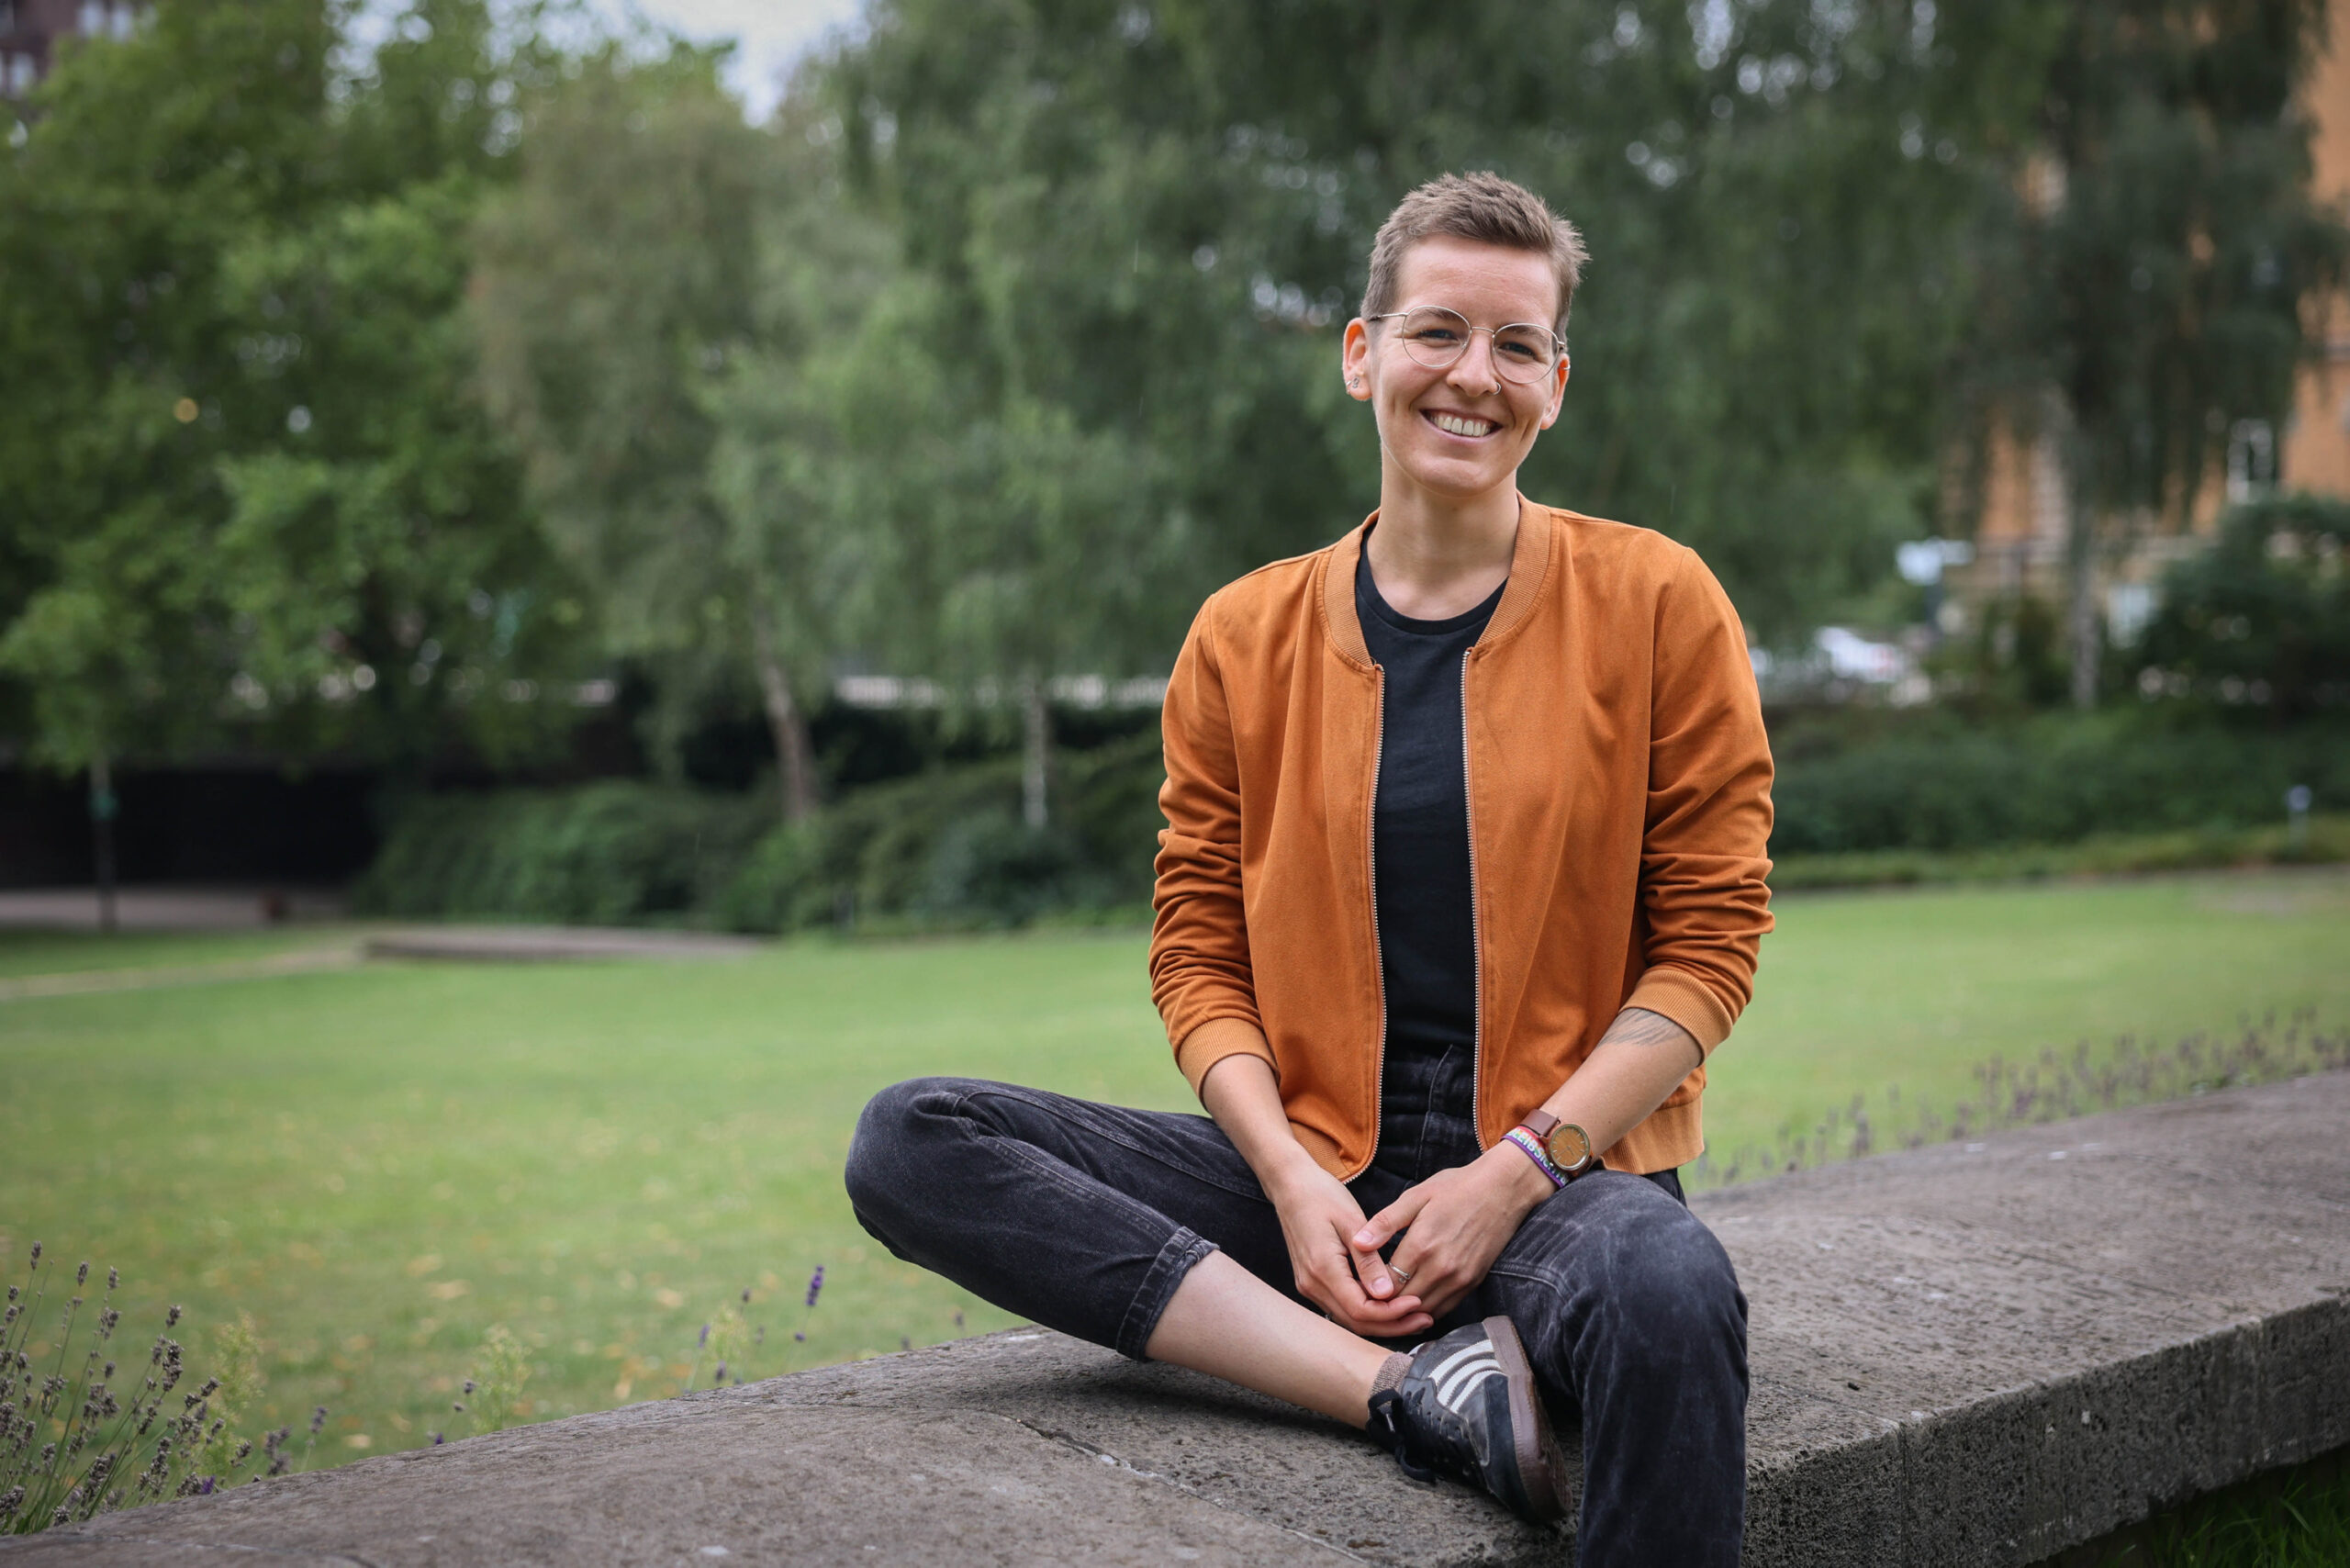 Leonie Schröter, Psychologists for Future